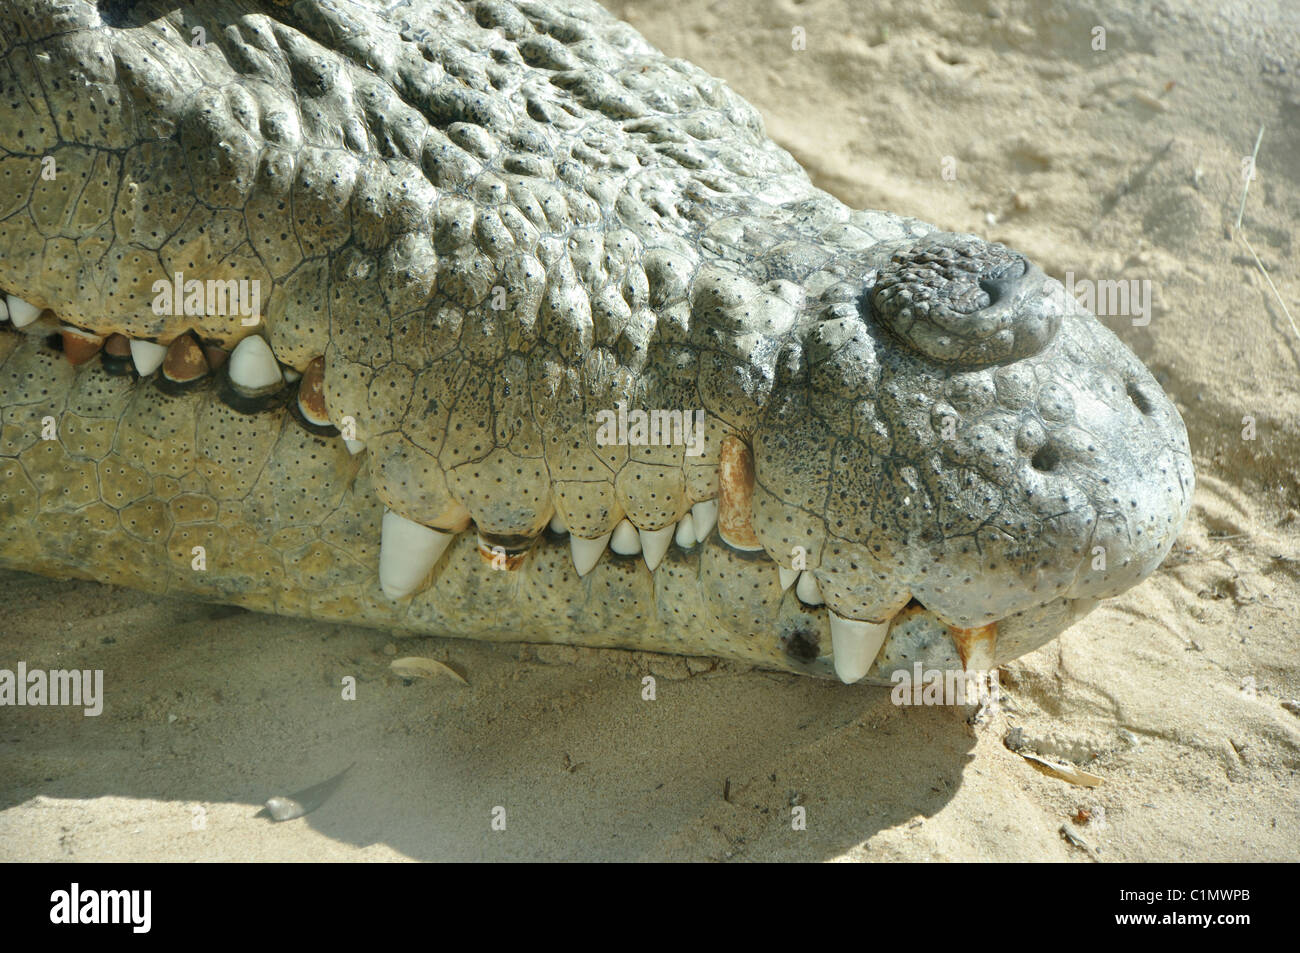 Crocodile nose Stock Photo